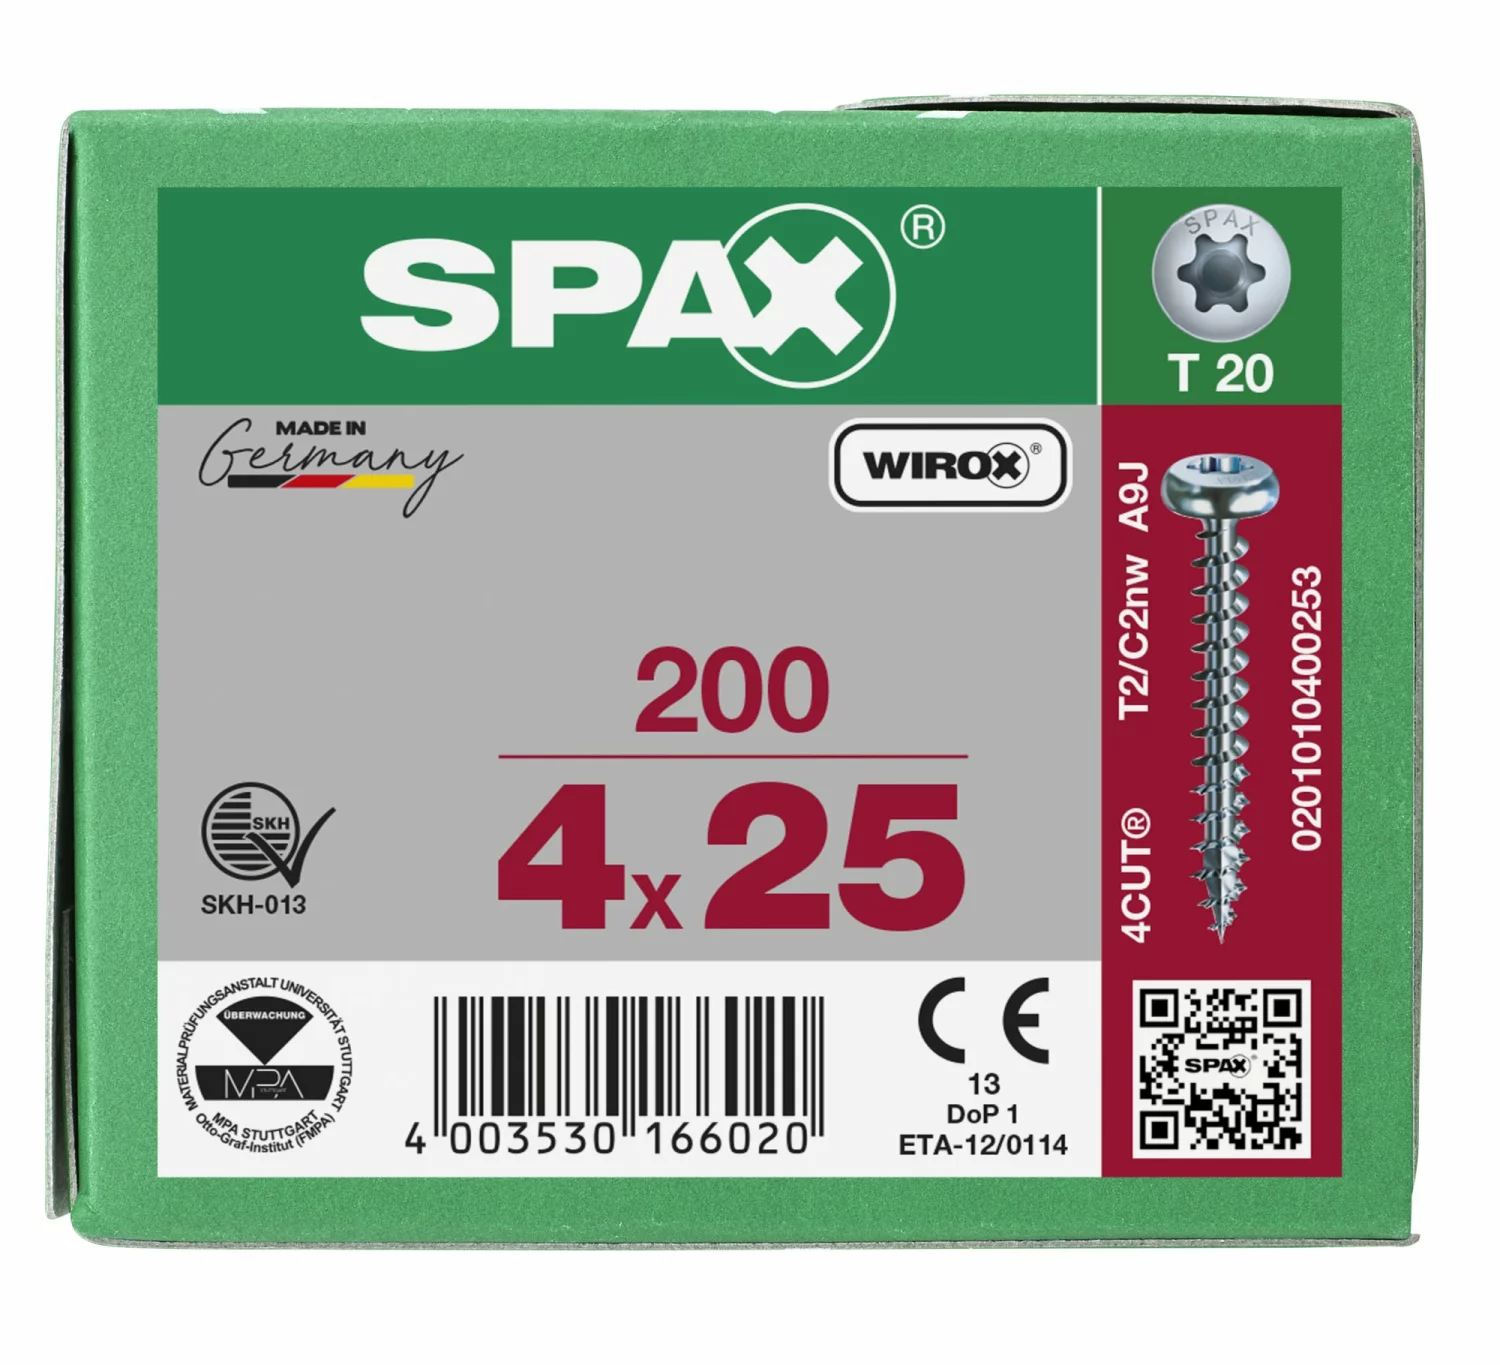 SPAX 201010400253 Universele schroef, Bolkop, 4 x 25, Voldraad, T-STAR plus TX20 - WIROX - 200 stuks-image